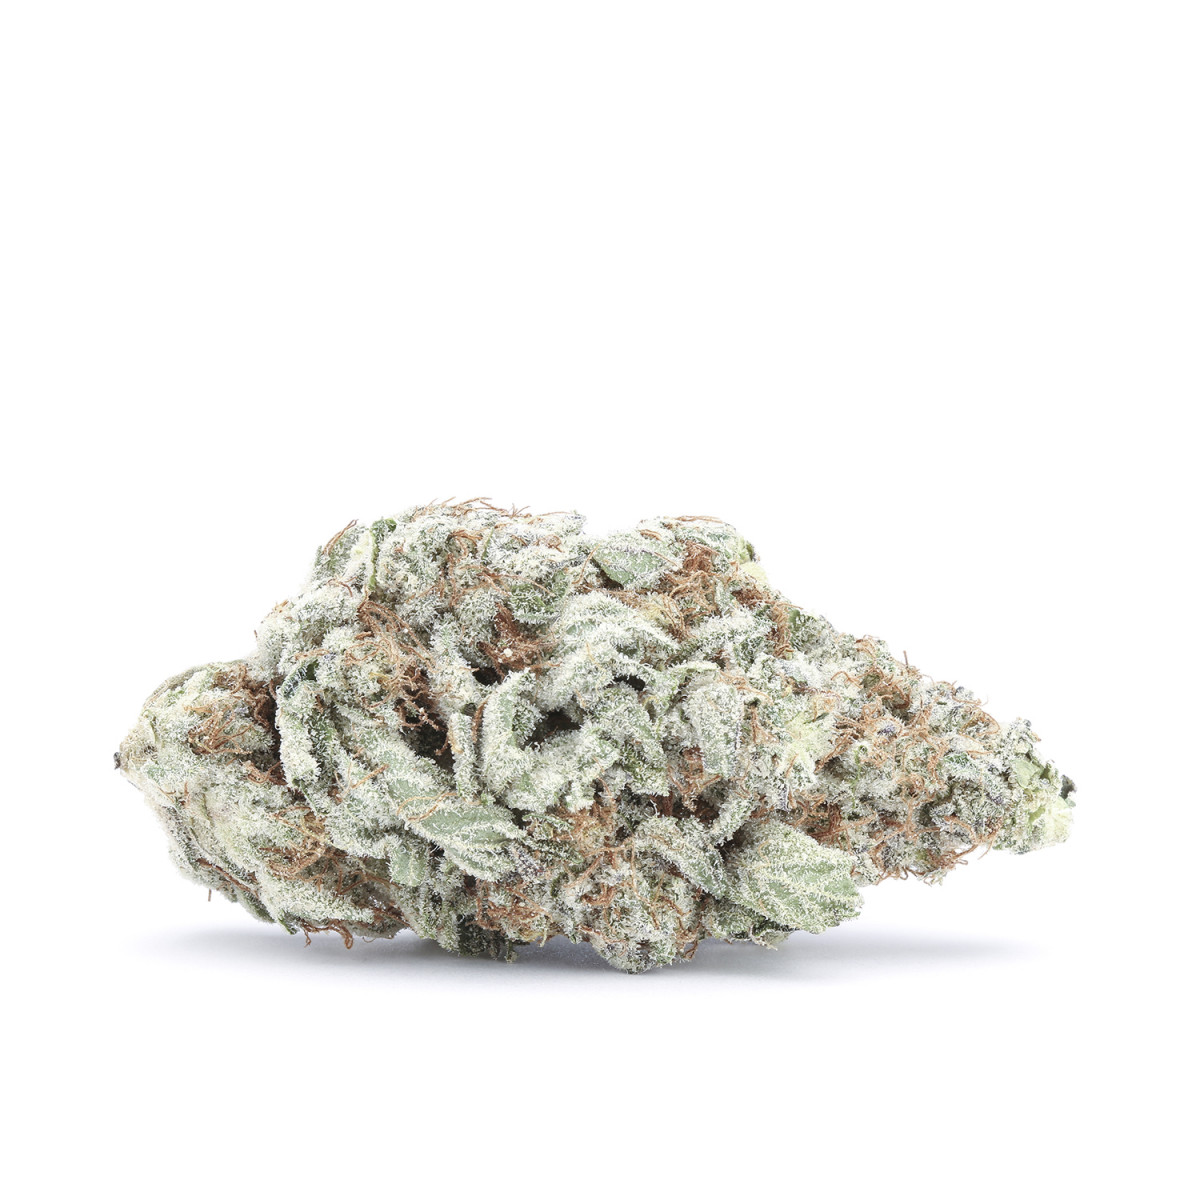 Purple Crack Hybrid marijuana strain from hotgrass.ca